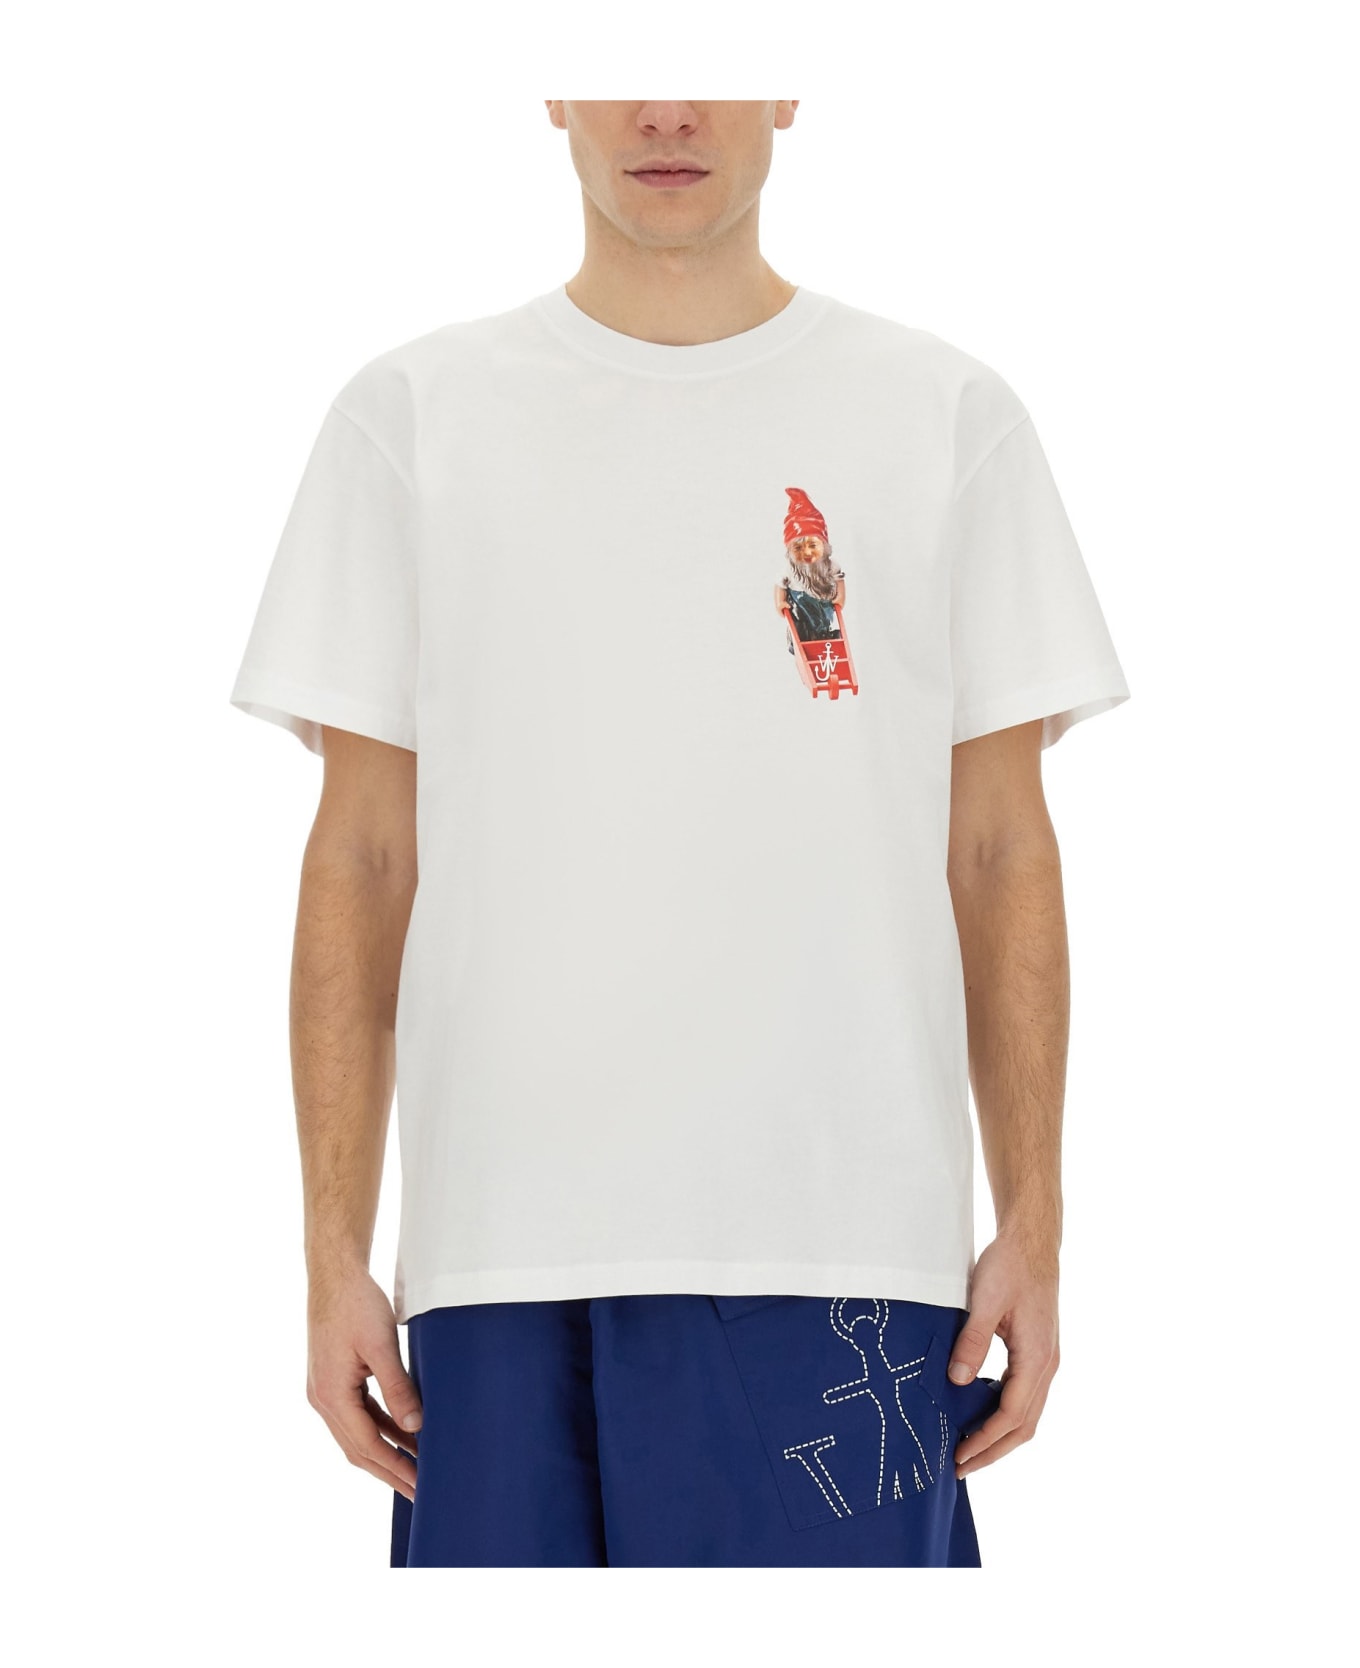 J.W. Anderson T-shirt 'gnome' - White